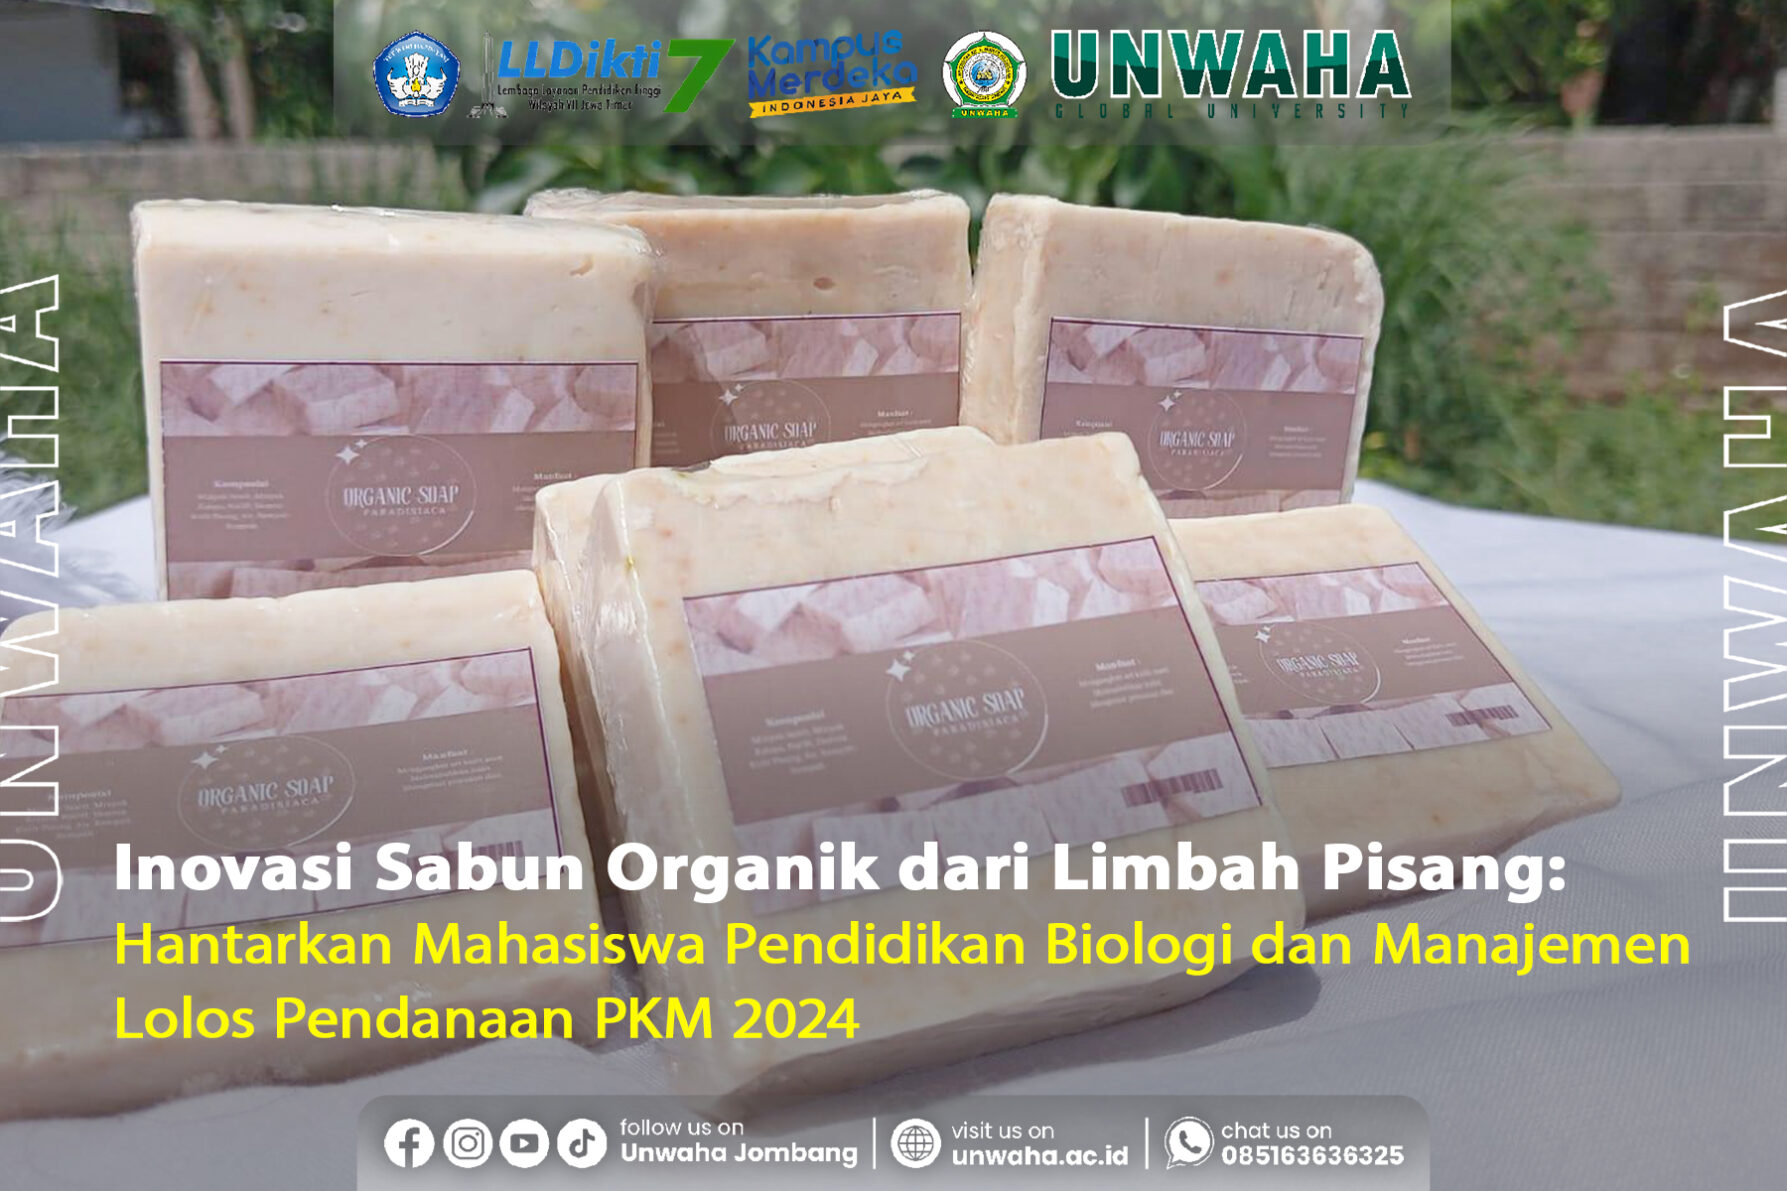 Inovasi Sabun Organik dari Limbah Pisang Hantarkan Mahasiswa Pendidikan Biologi dan Manajemen Lolos Pendanaan PKM 2024